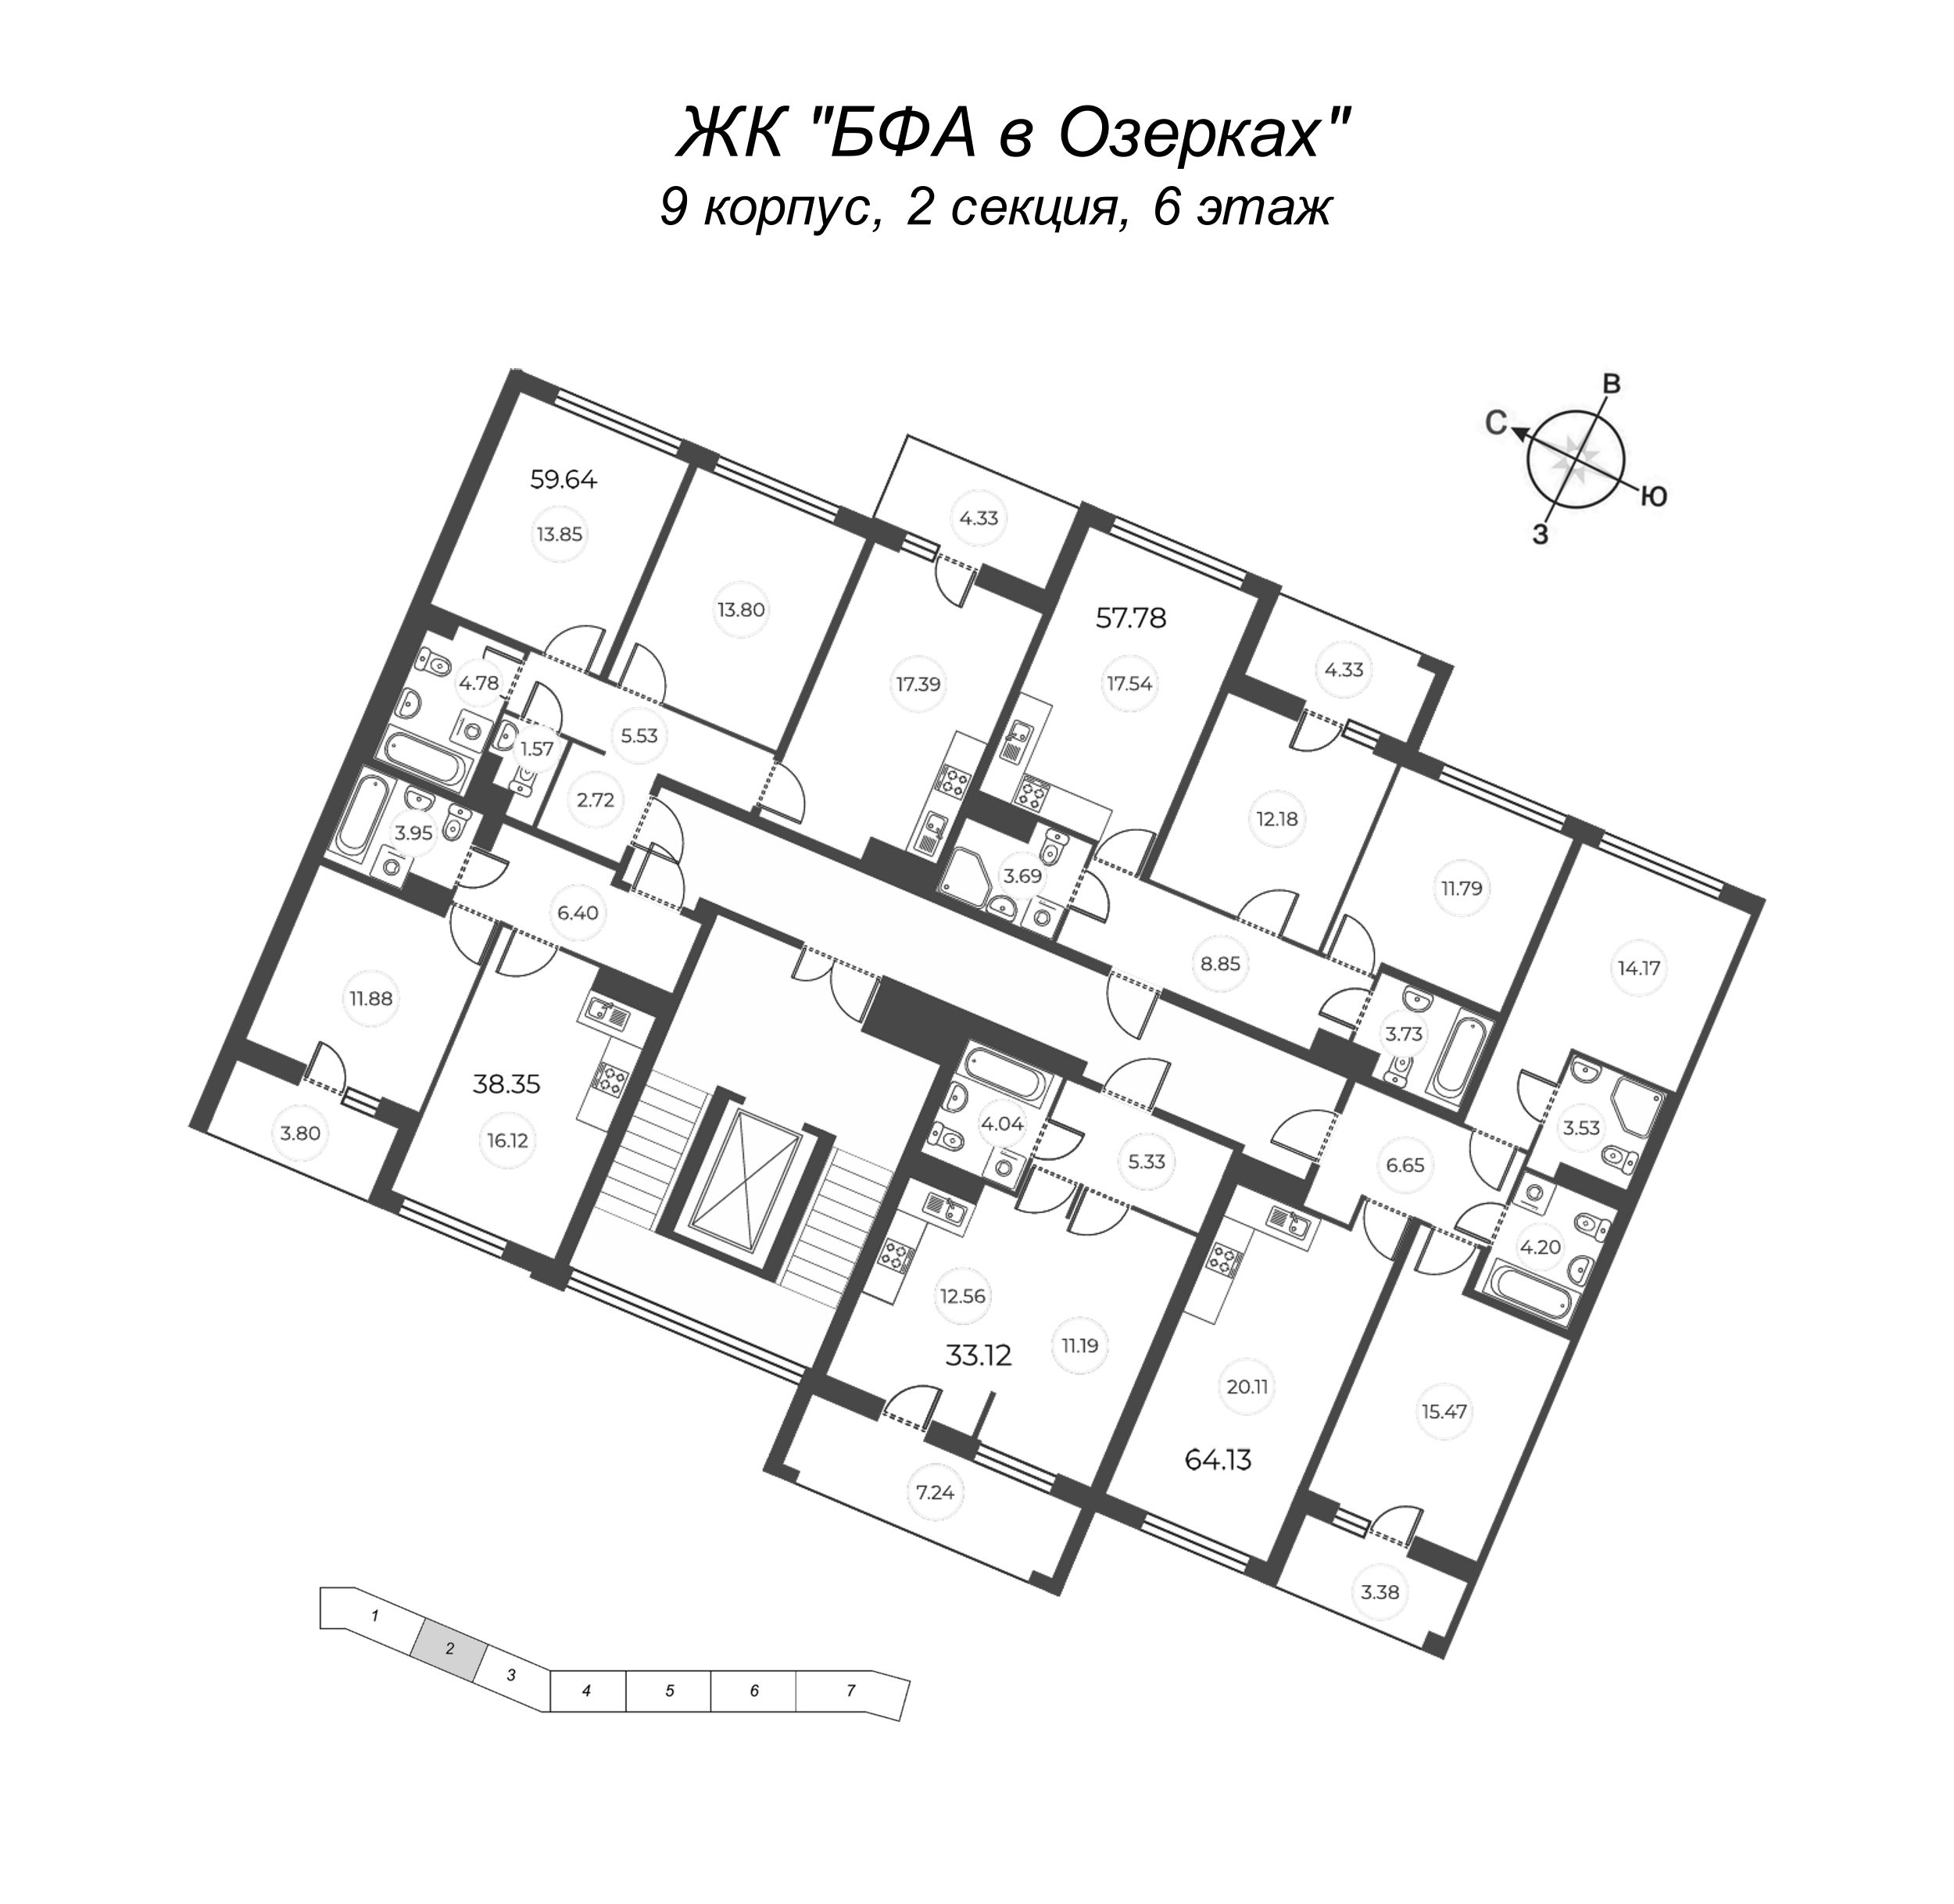 2-комнатная (Евро) квартира, 40.25 м² в ЖК "БФА в Озерках" - планировка этажа